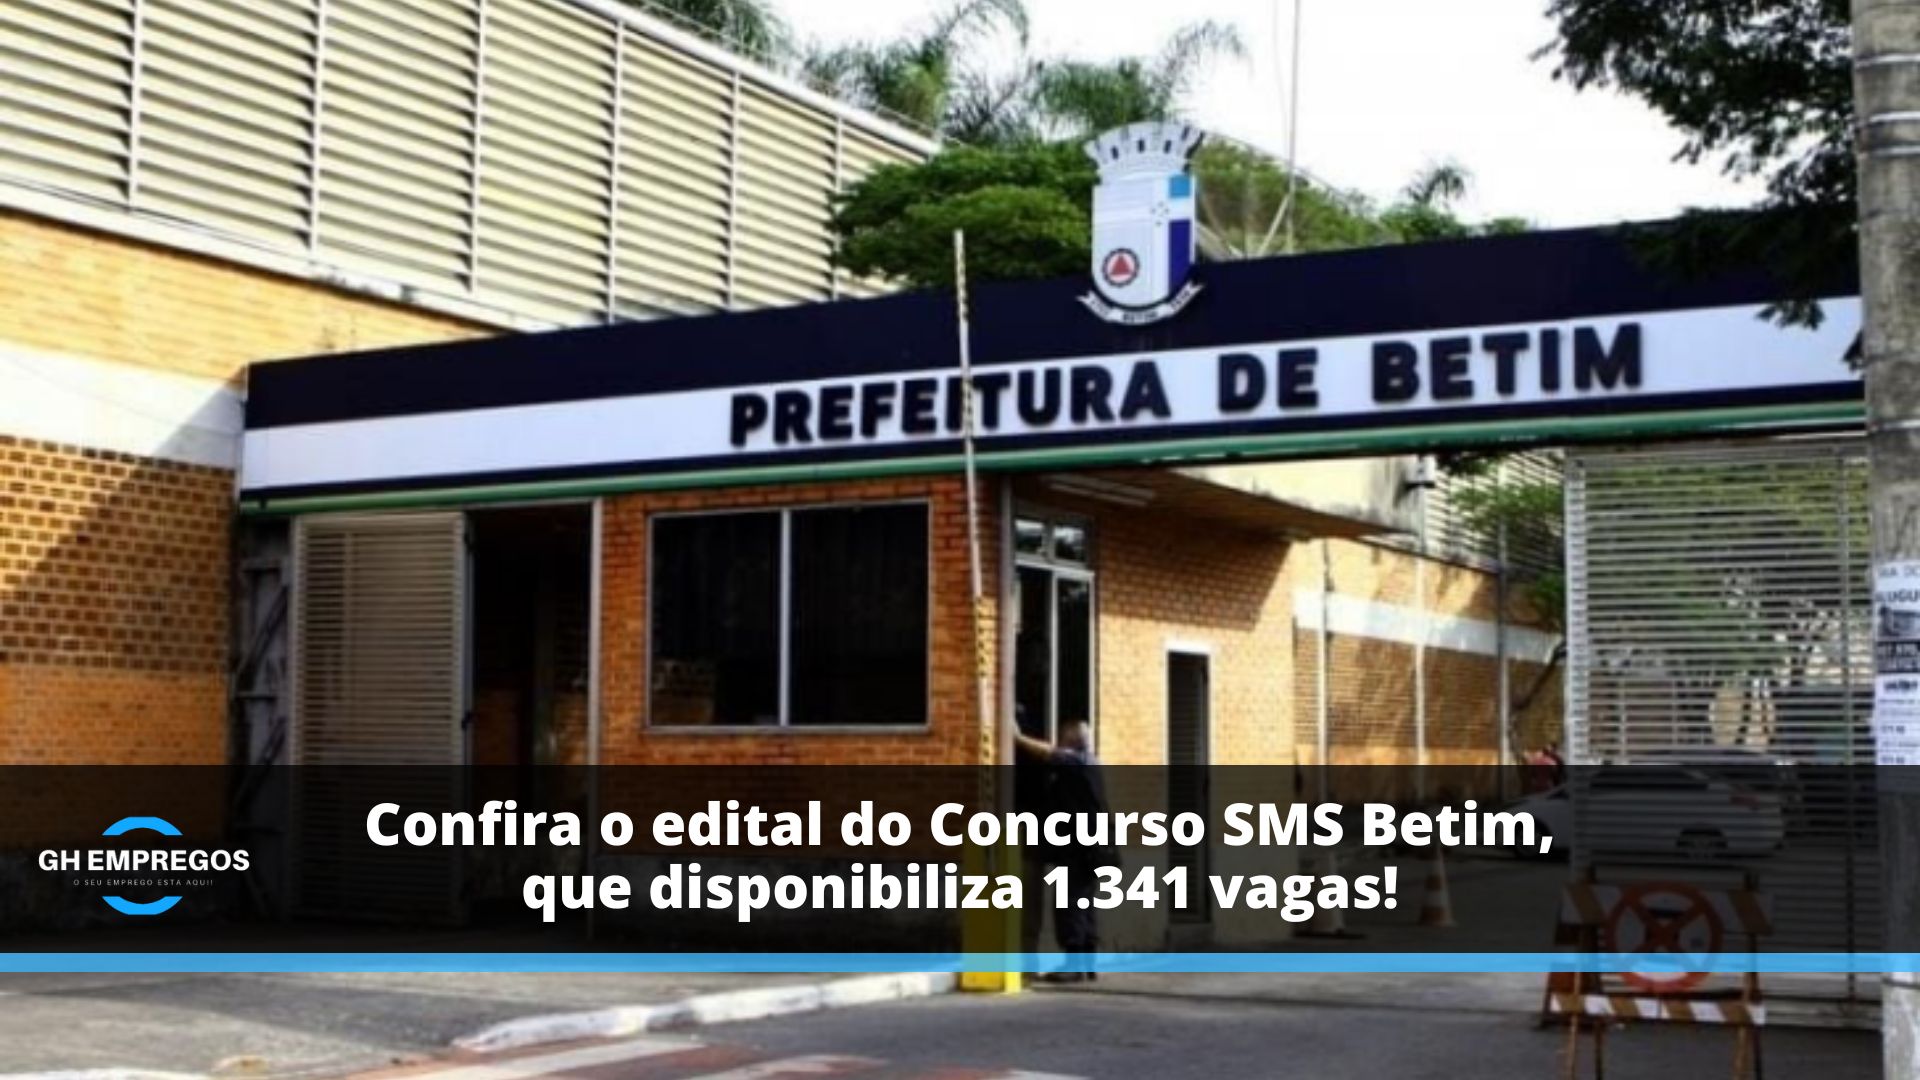 Confira o edital do Concurso SMS Betim, que disponibiliza 1.341 vagas!